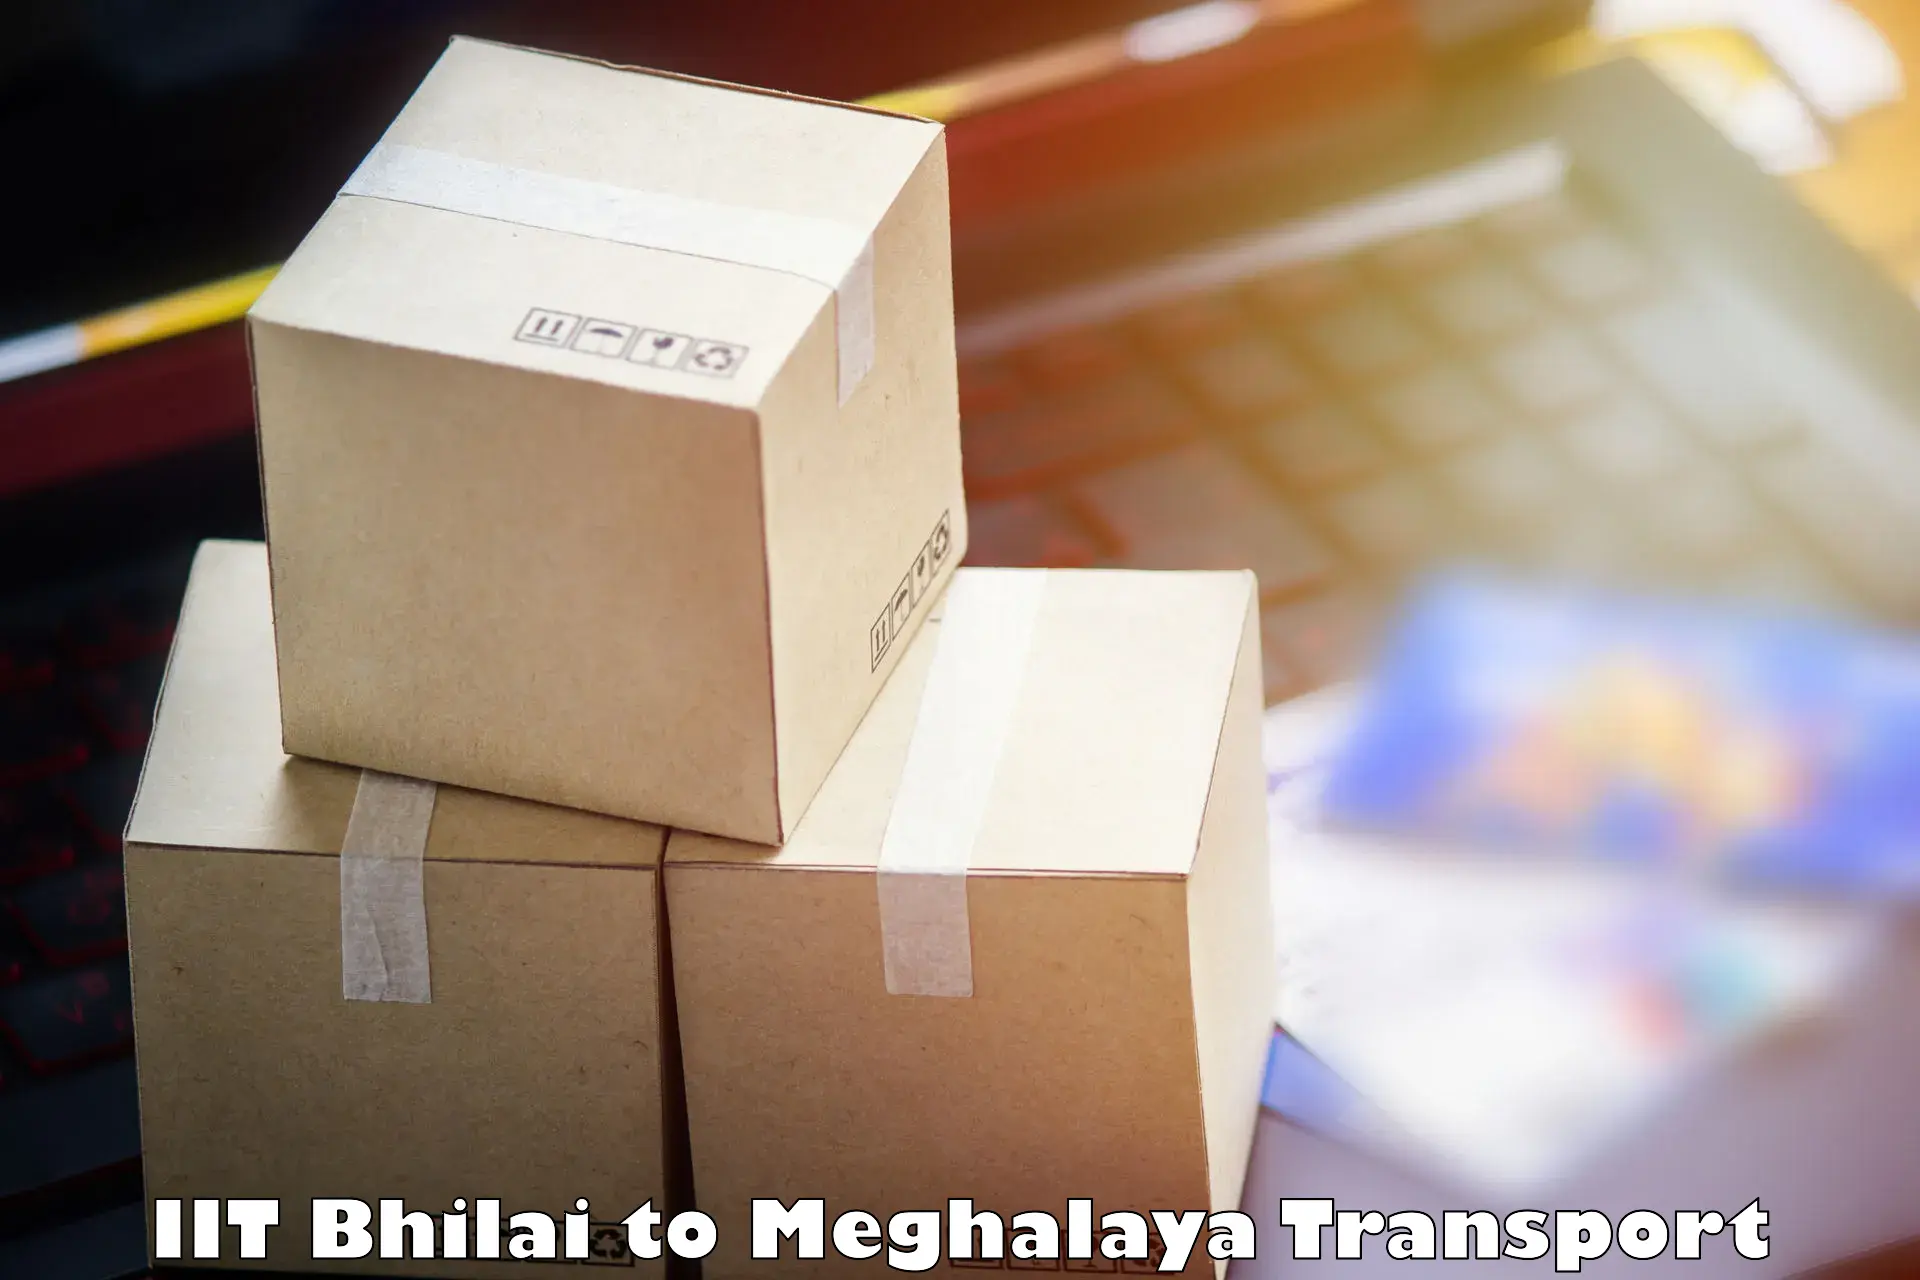 Daily transport service IIT Bhilai to East Khasi Hills